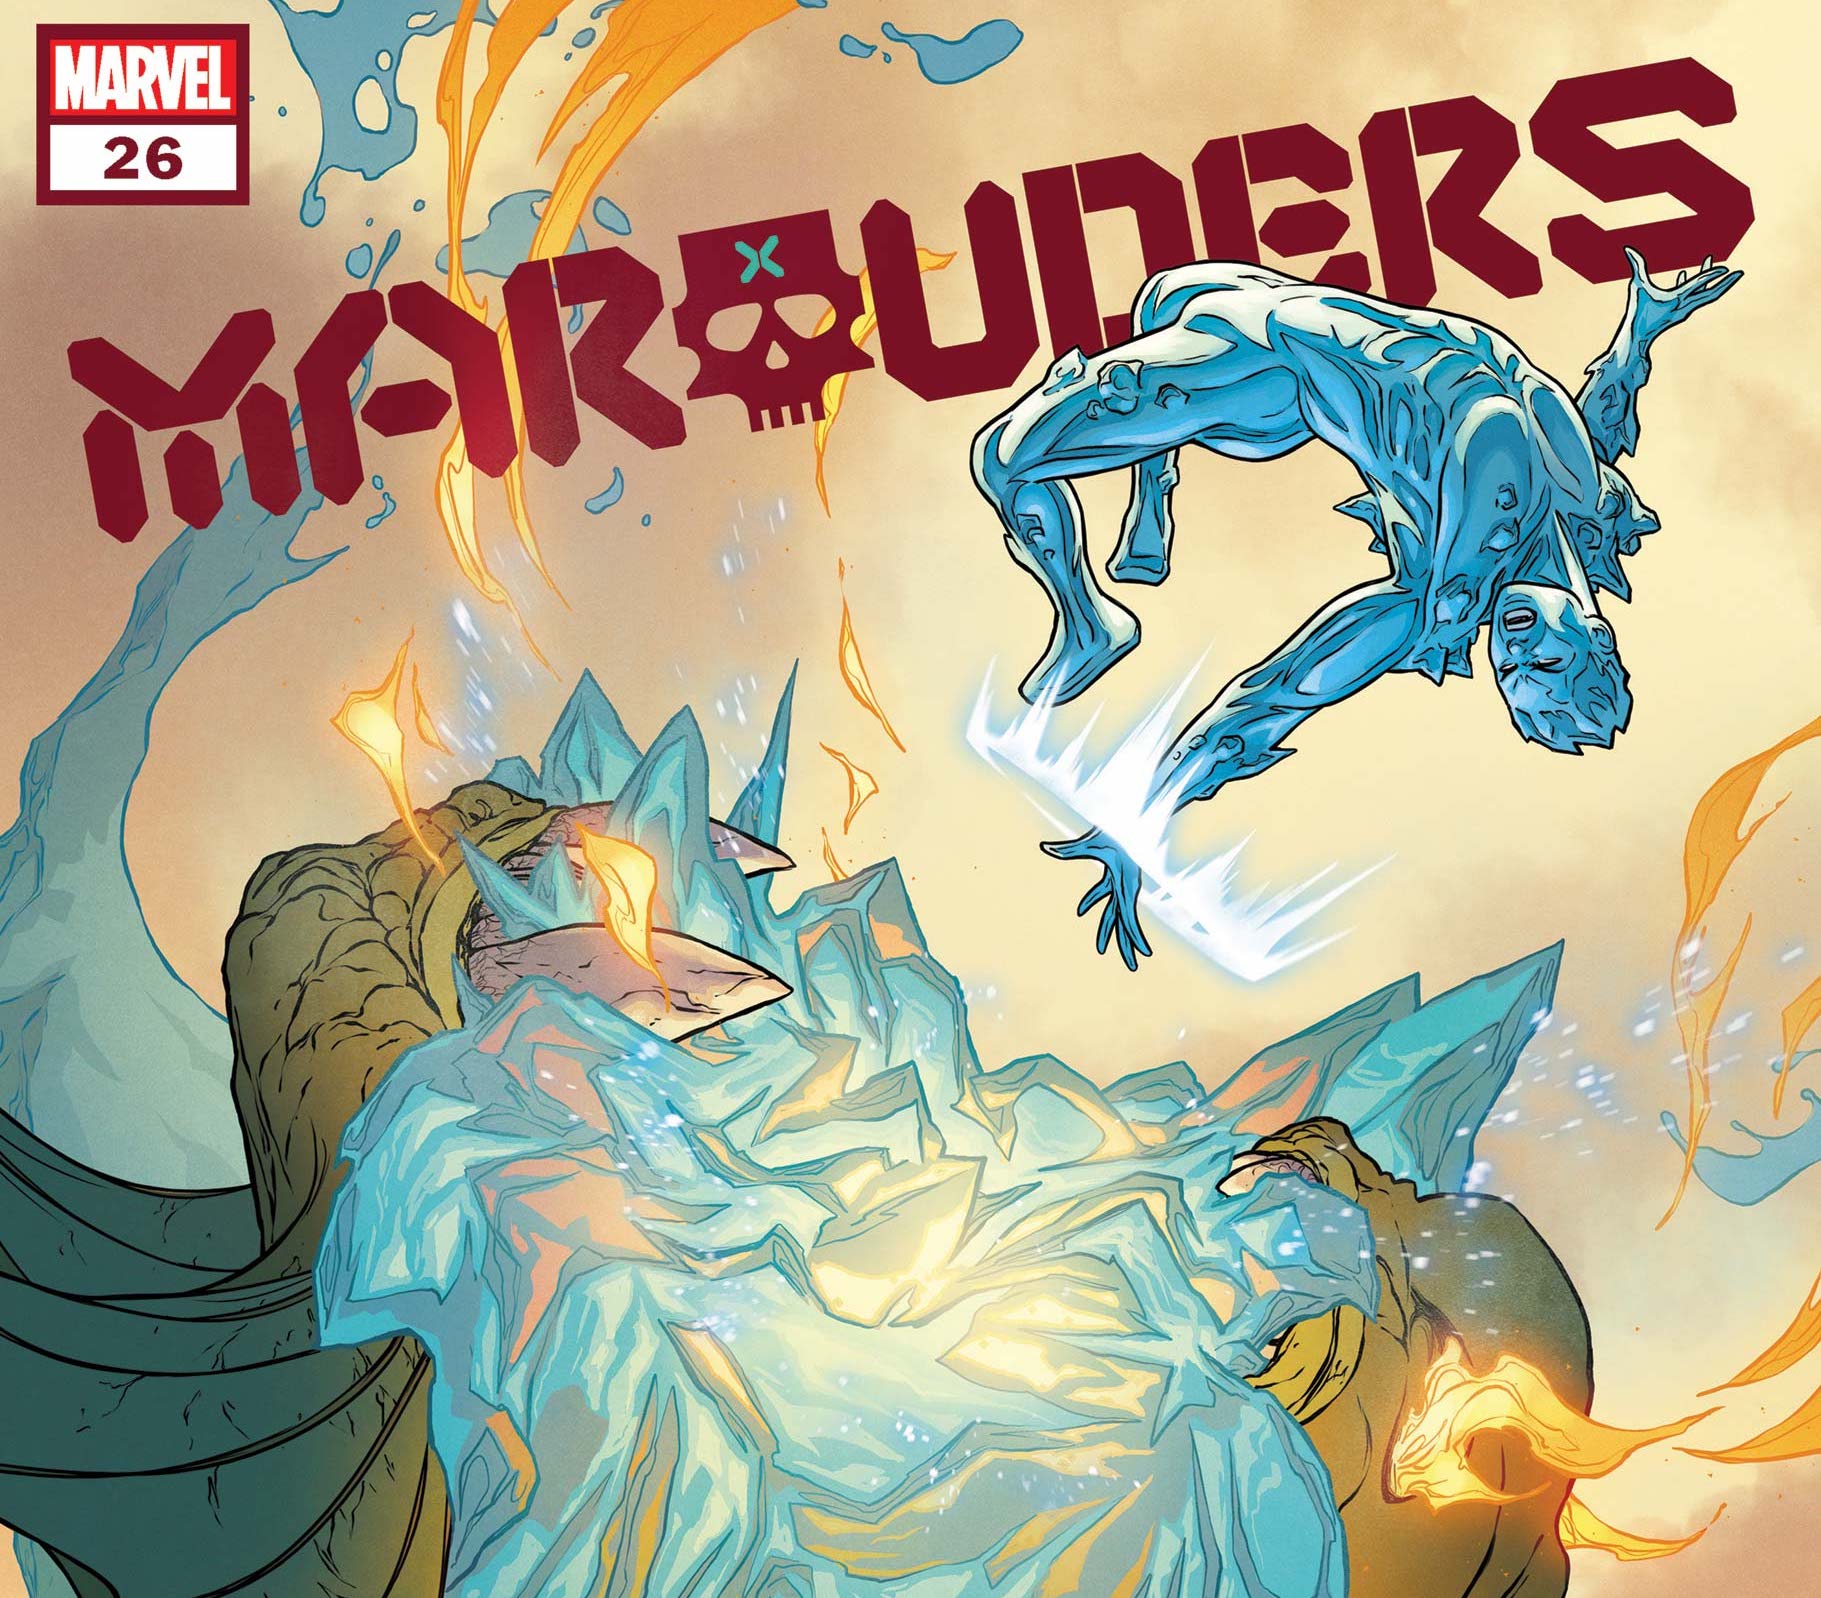 'Marauders' #26 plucks heartstrings and offers a kaiju battle